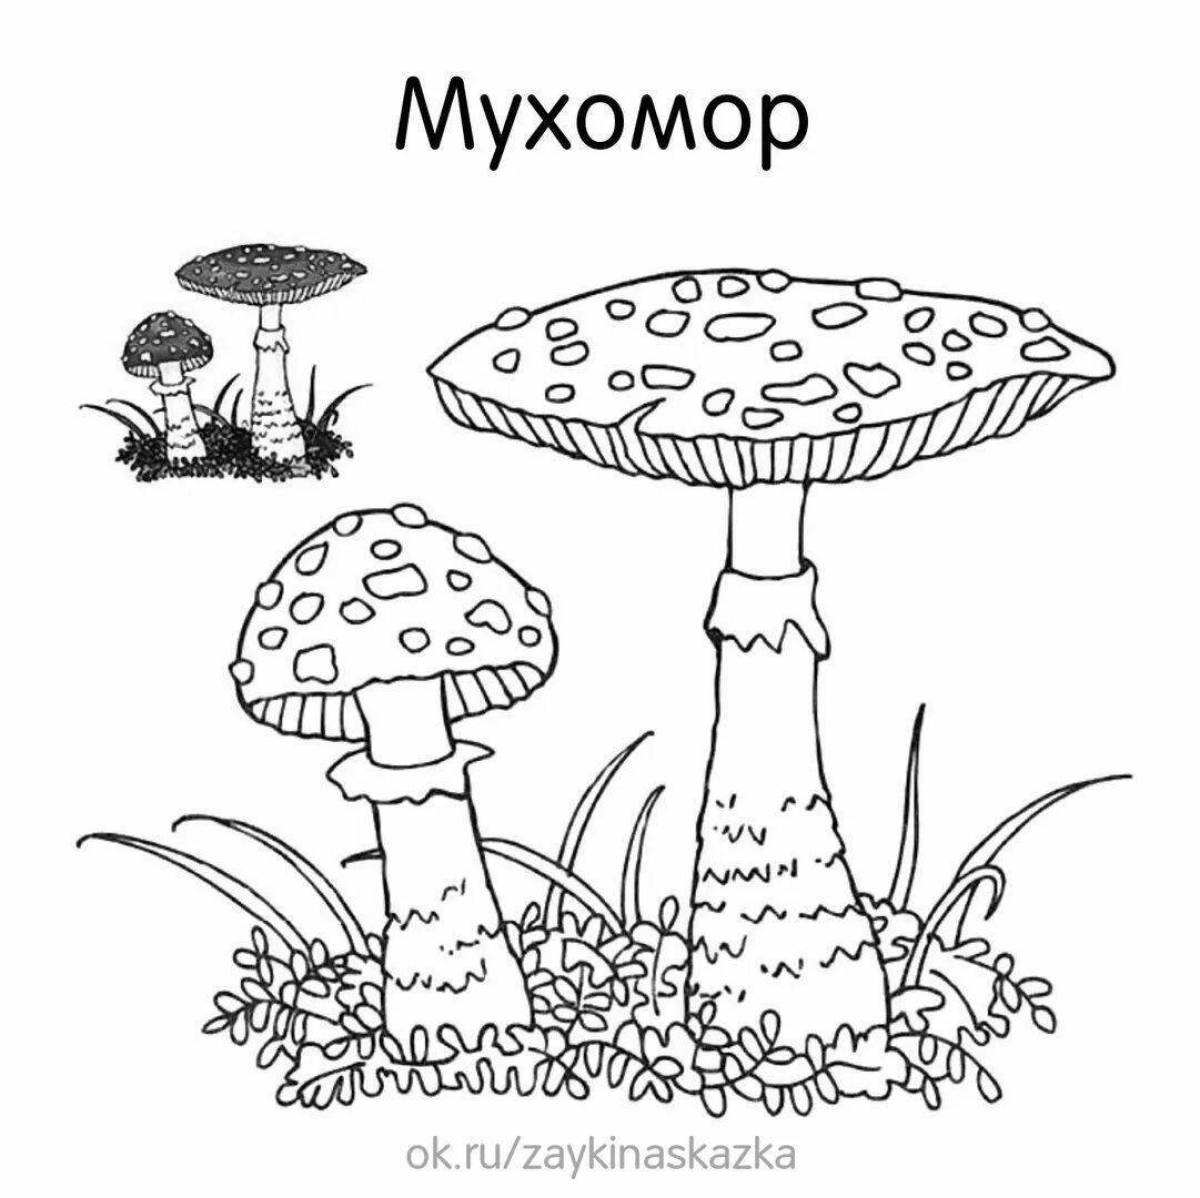 Intriguing non-edible mushrooms for children